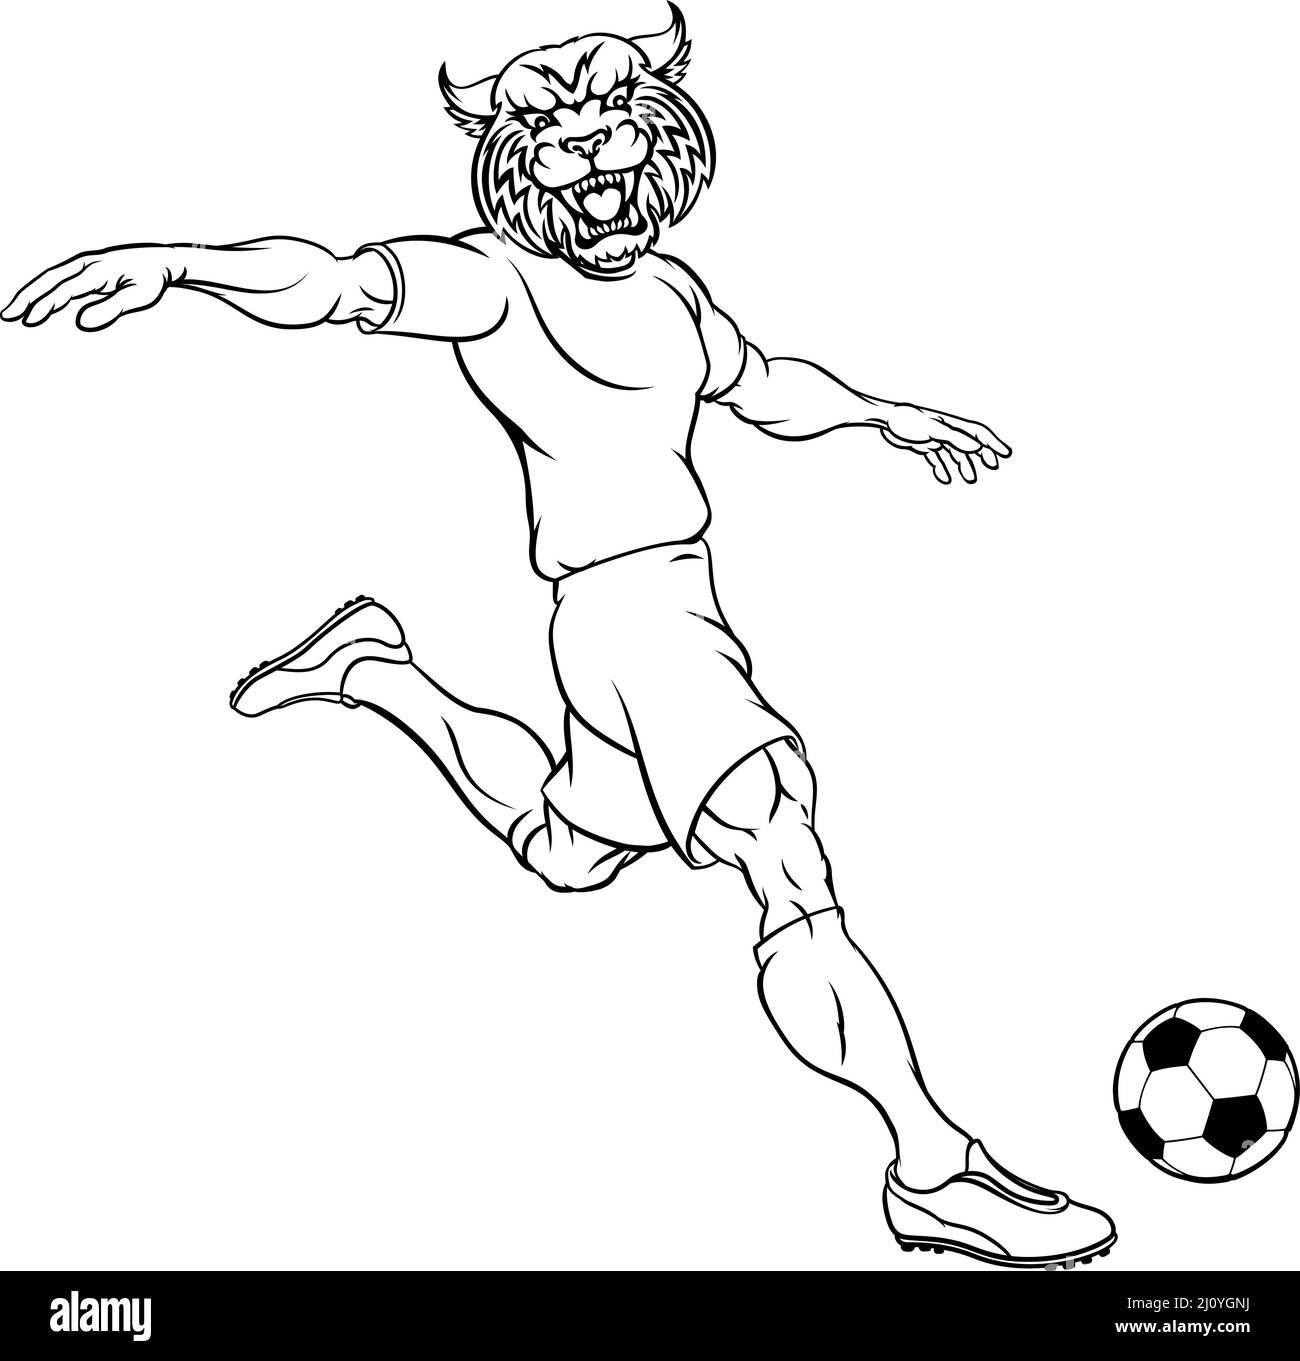 Wildcat Soccer Football Player Sports Mascot Stock Vector